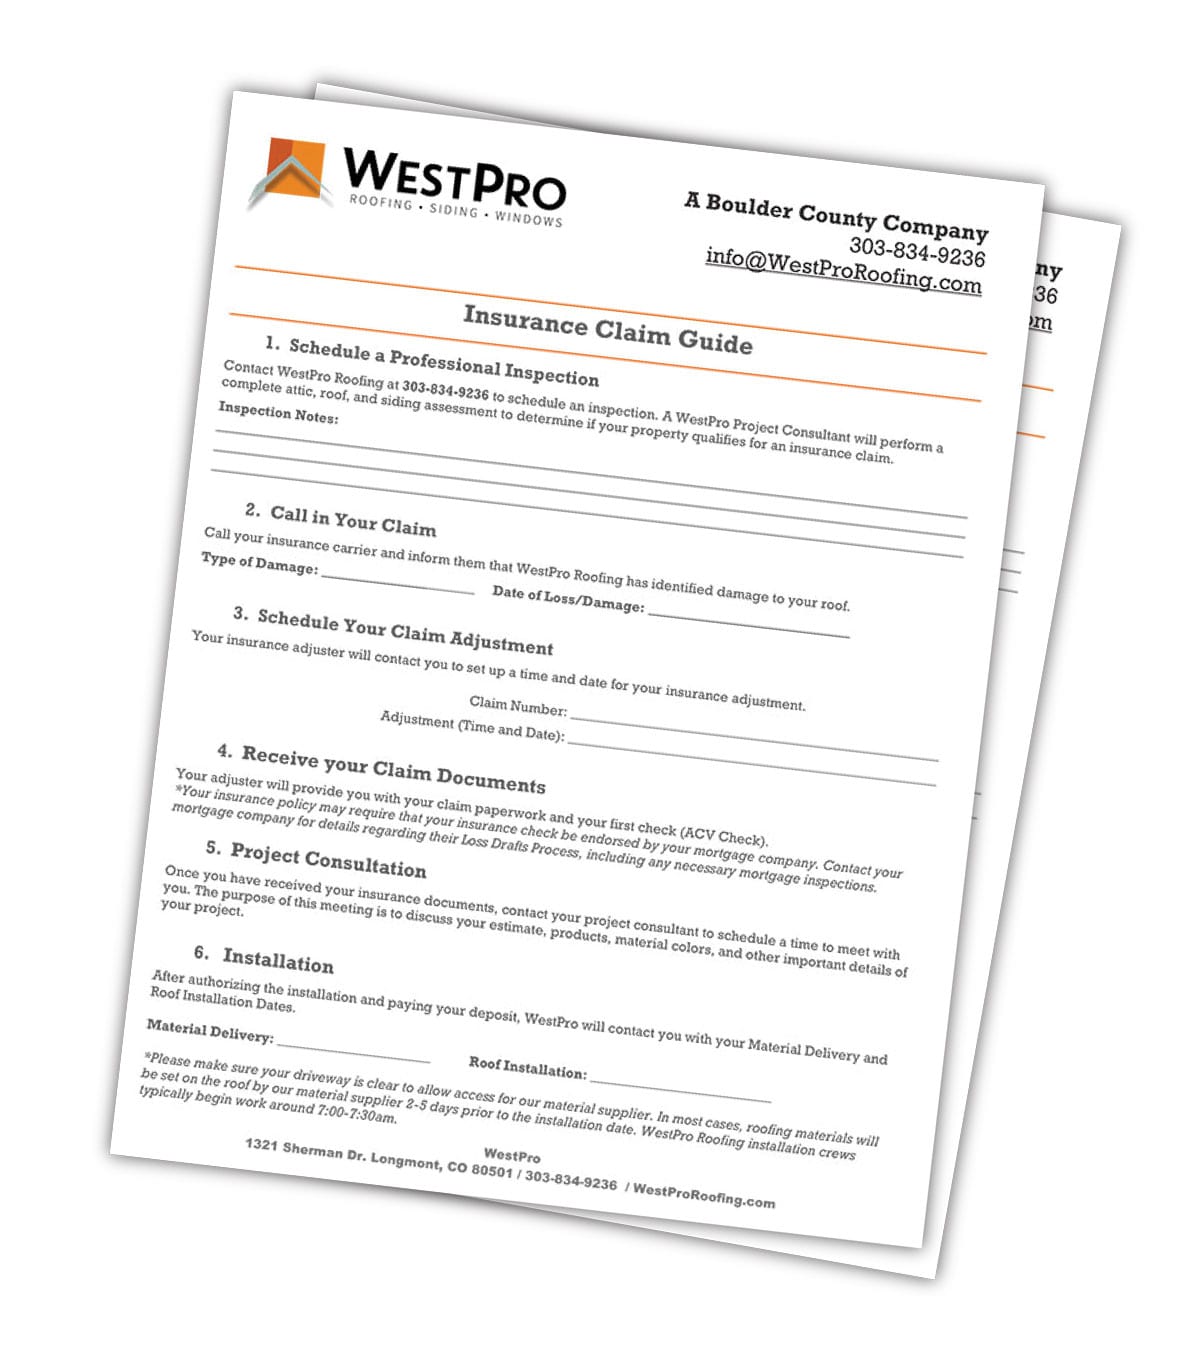 WestPro's insurance claim guide.